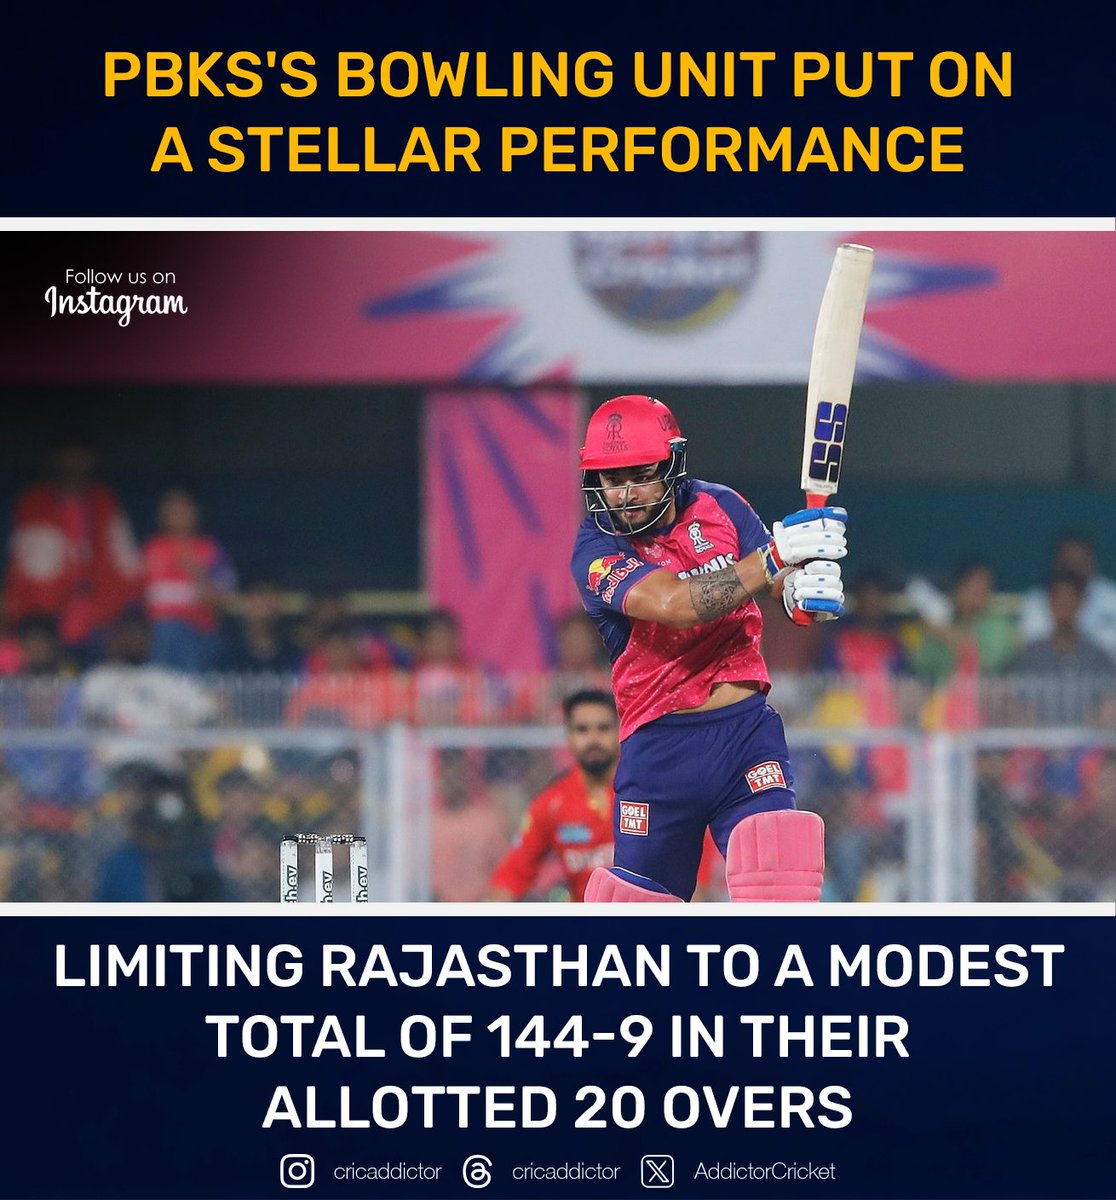 Punjab Kings needs 145 runs to win the game. #RRvsPBKS #IPL24 #CRICKET #ICC